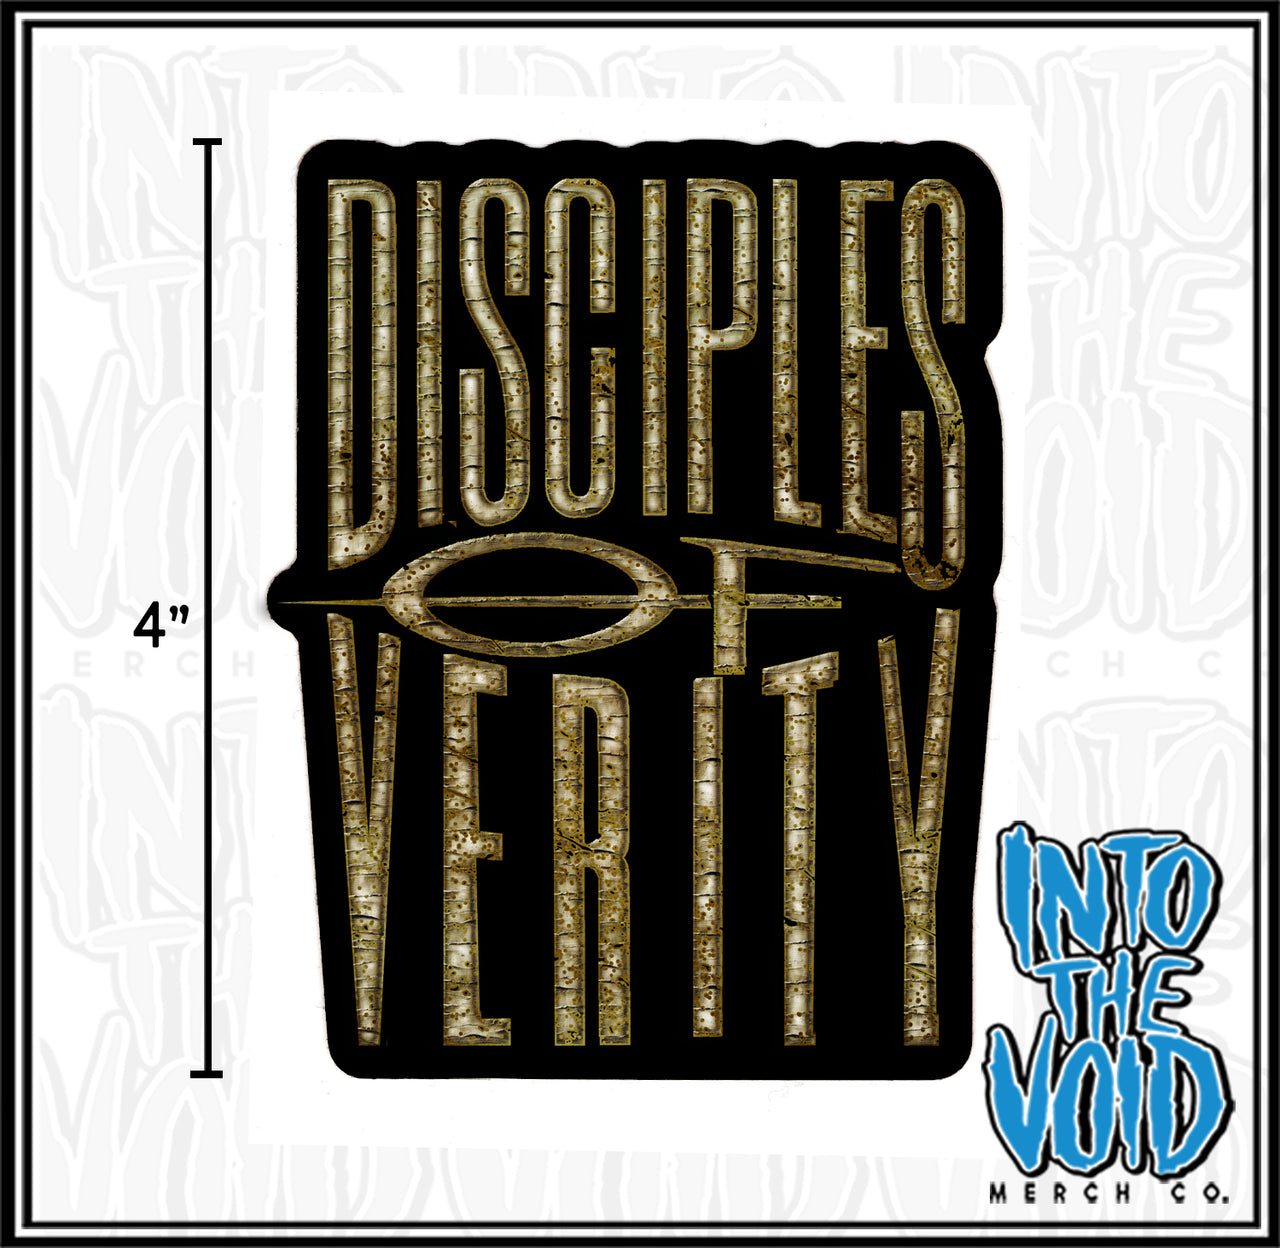 DISCIPLES OF VERITY - LOGO 1 - Vinyl Sticker